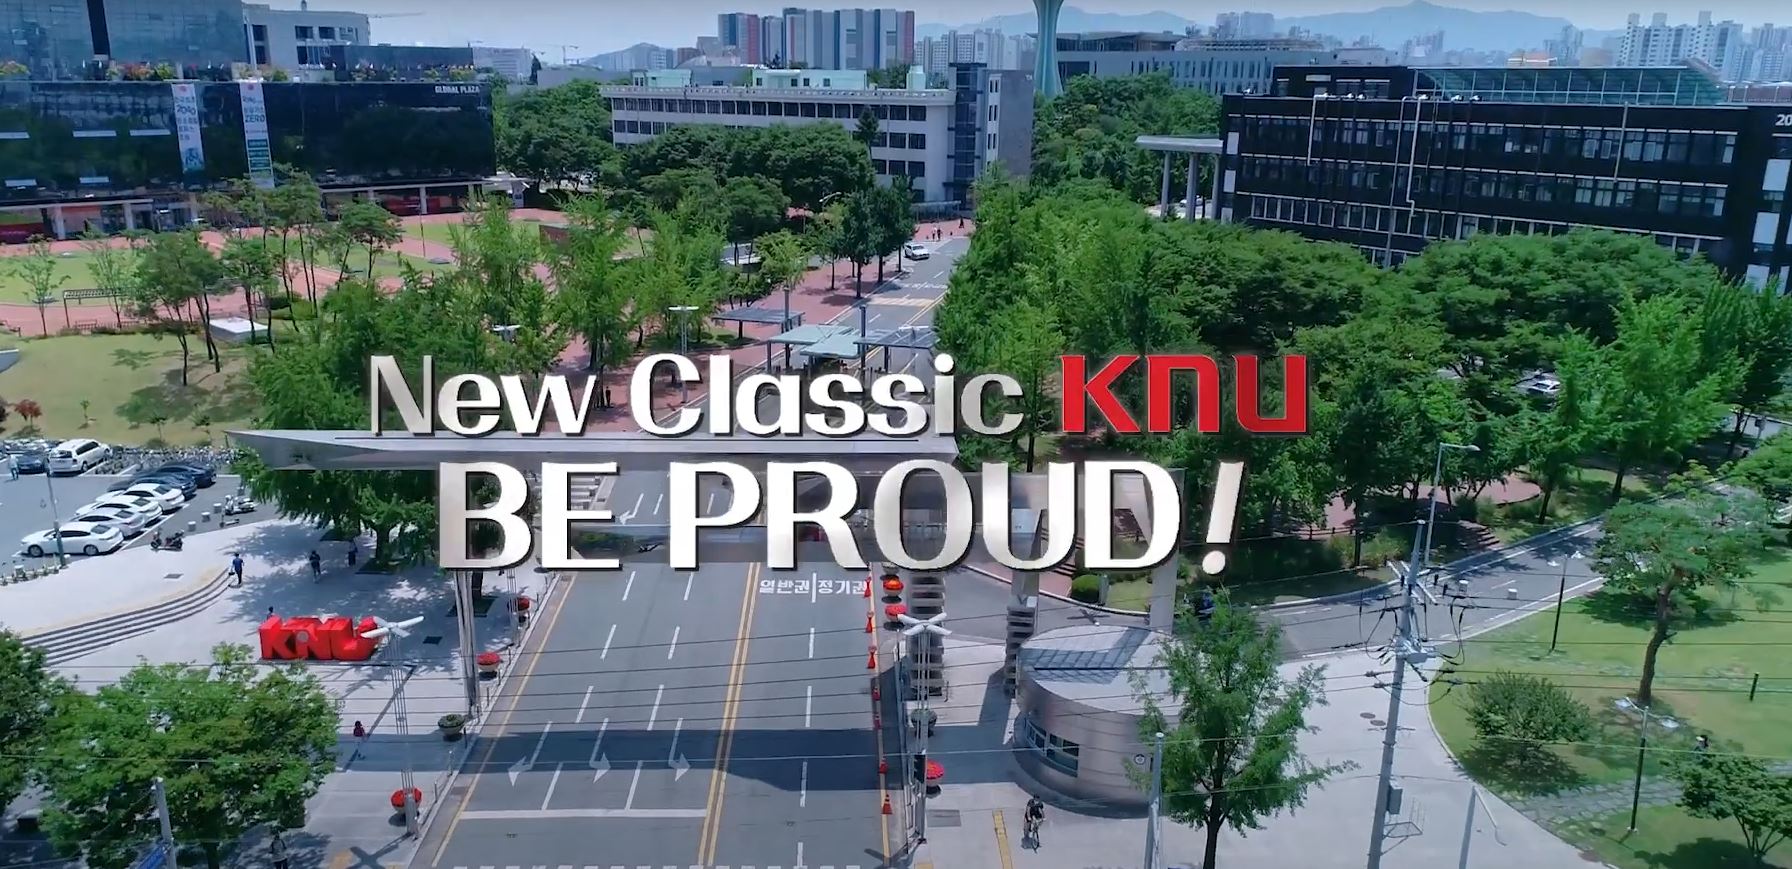 NEW Classic KNU, BE PROUD! - Kyungpook National University